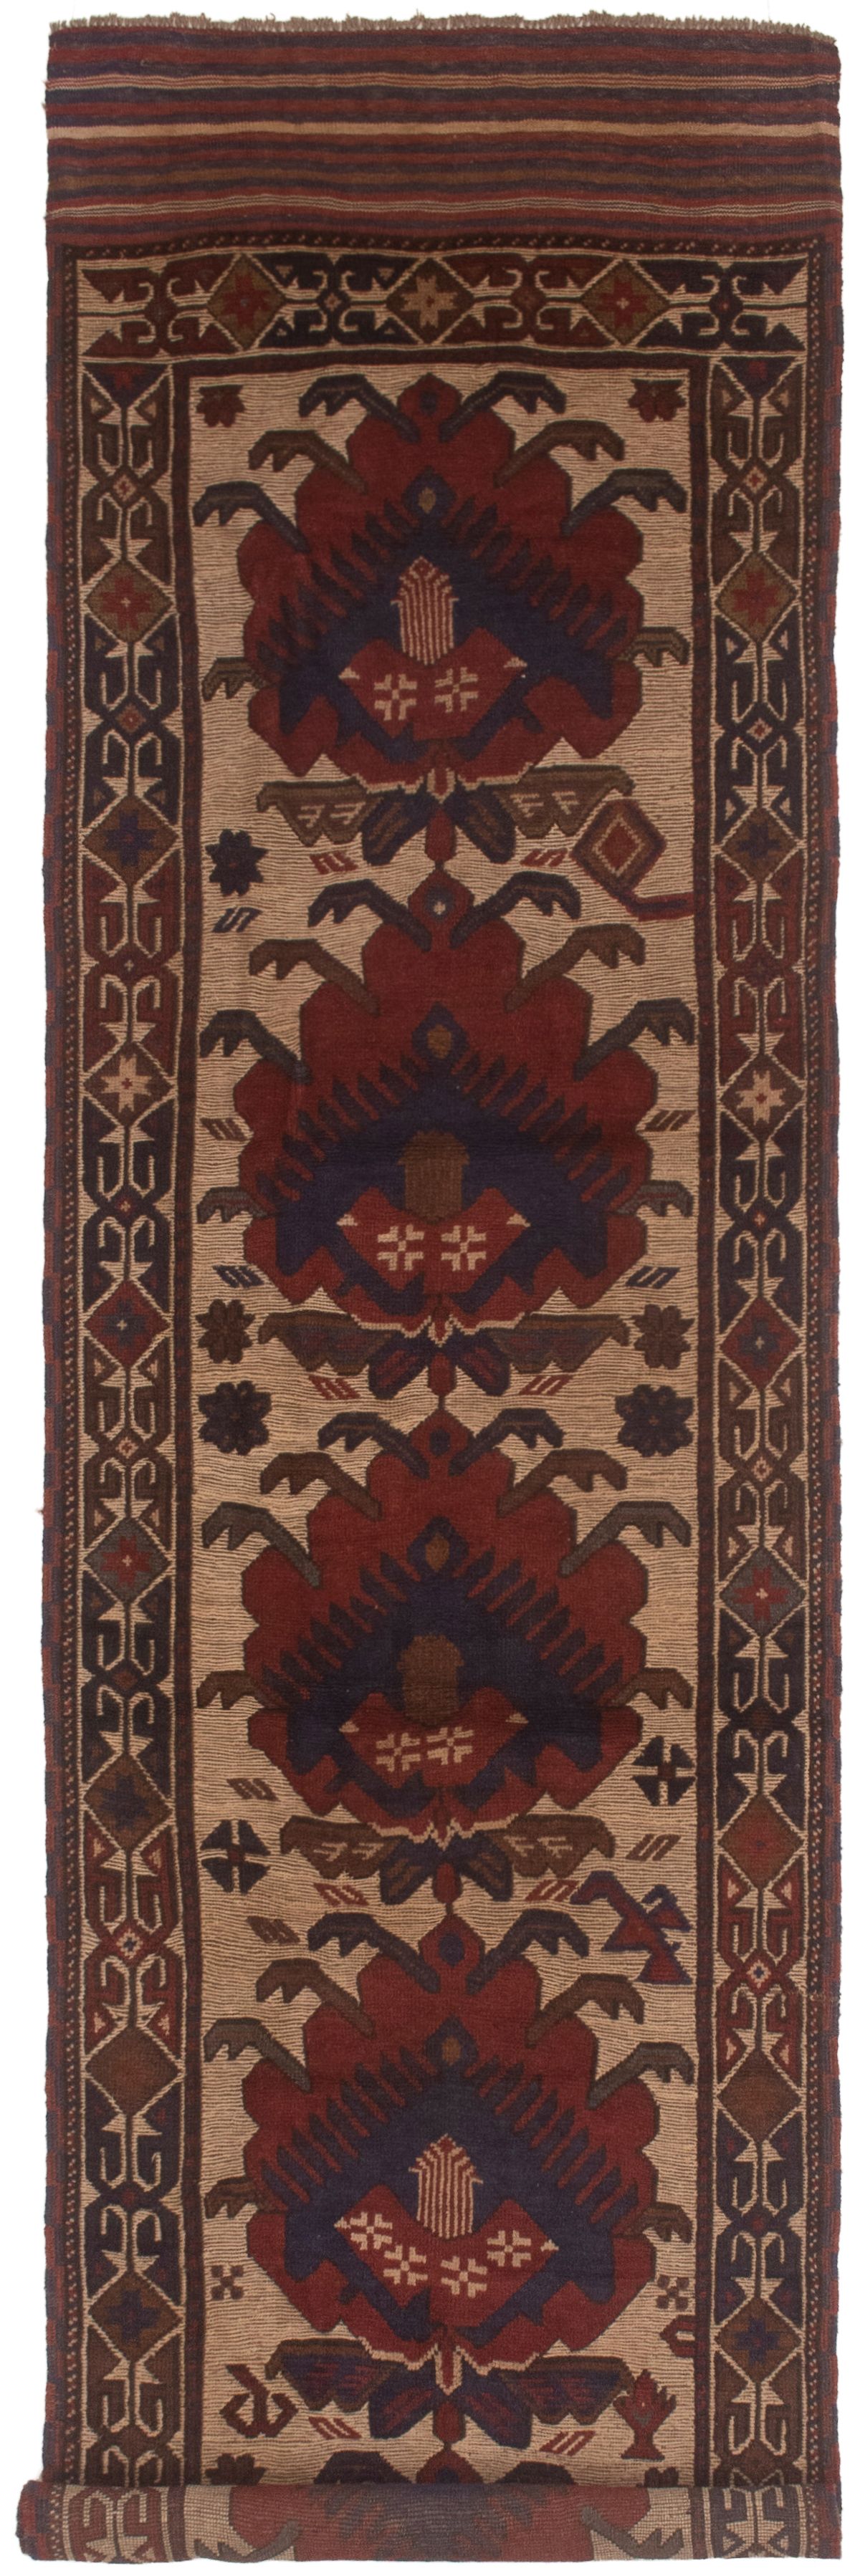 Hand-knotted Tajik Caucasian Cream Wool Rug 2'9" x 12'1" Size: 2'9" x 12'1"  